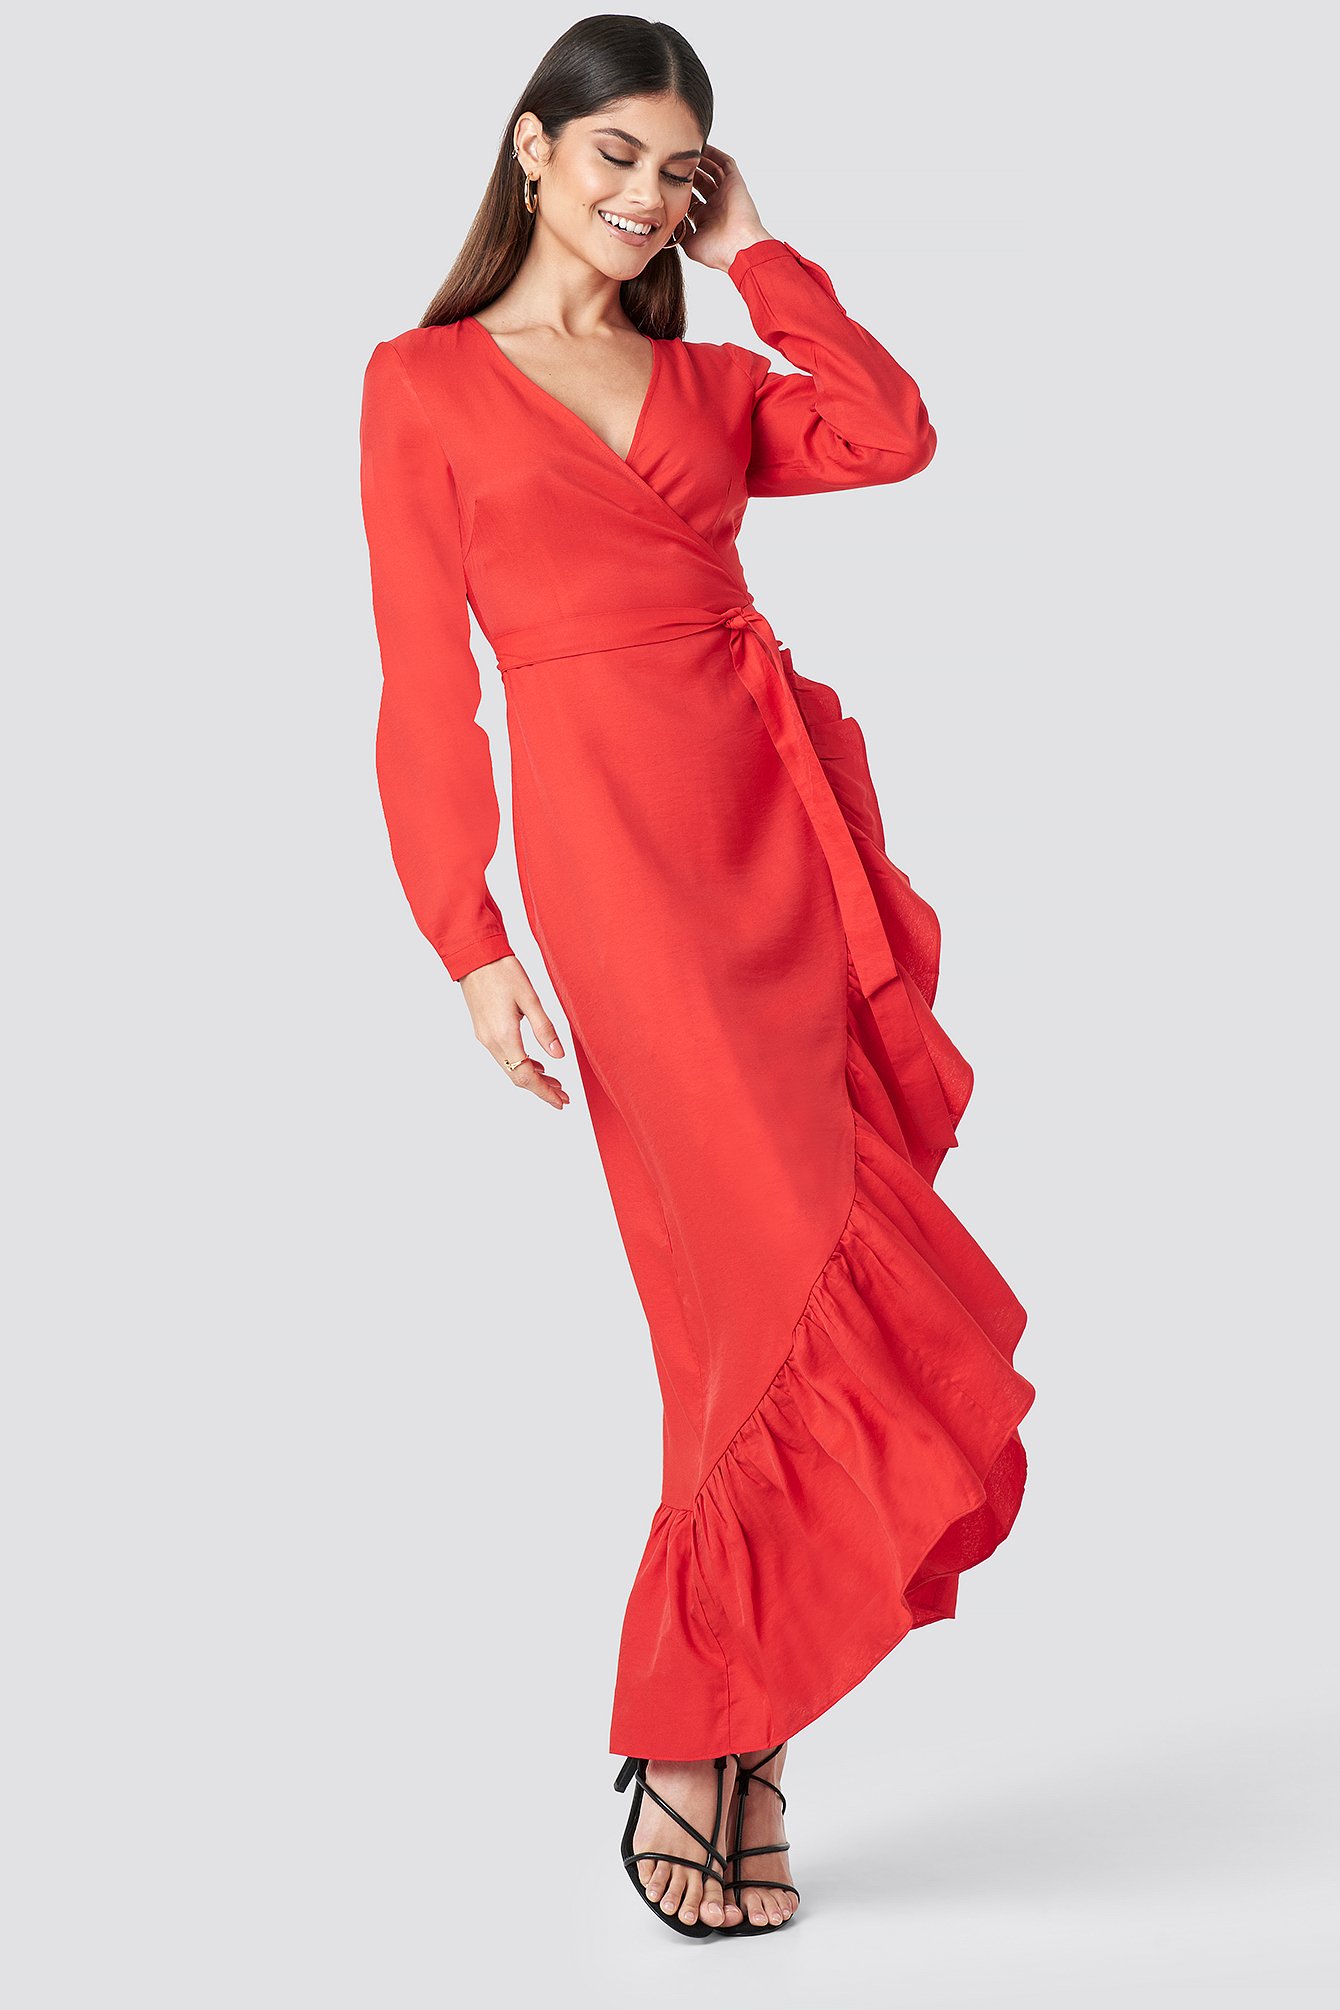 MILENA KARL X NA-KD Flounce Overlap Dress Red